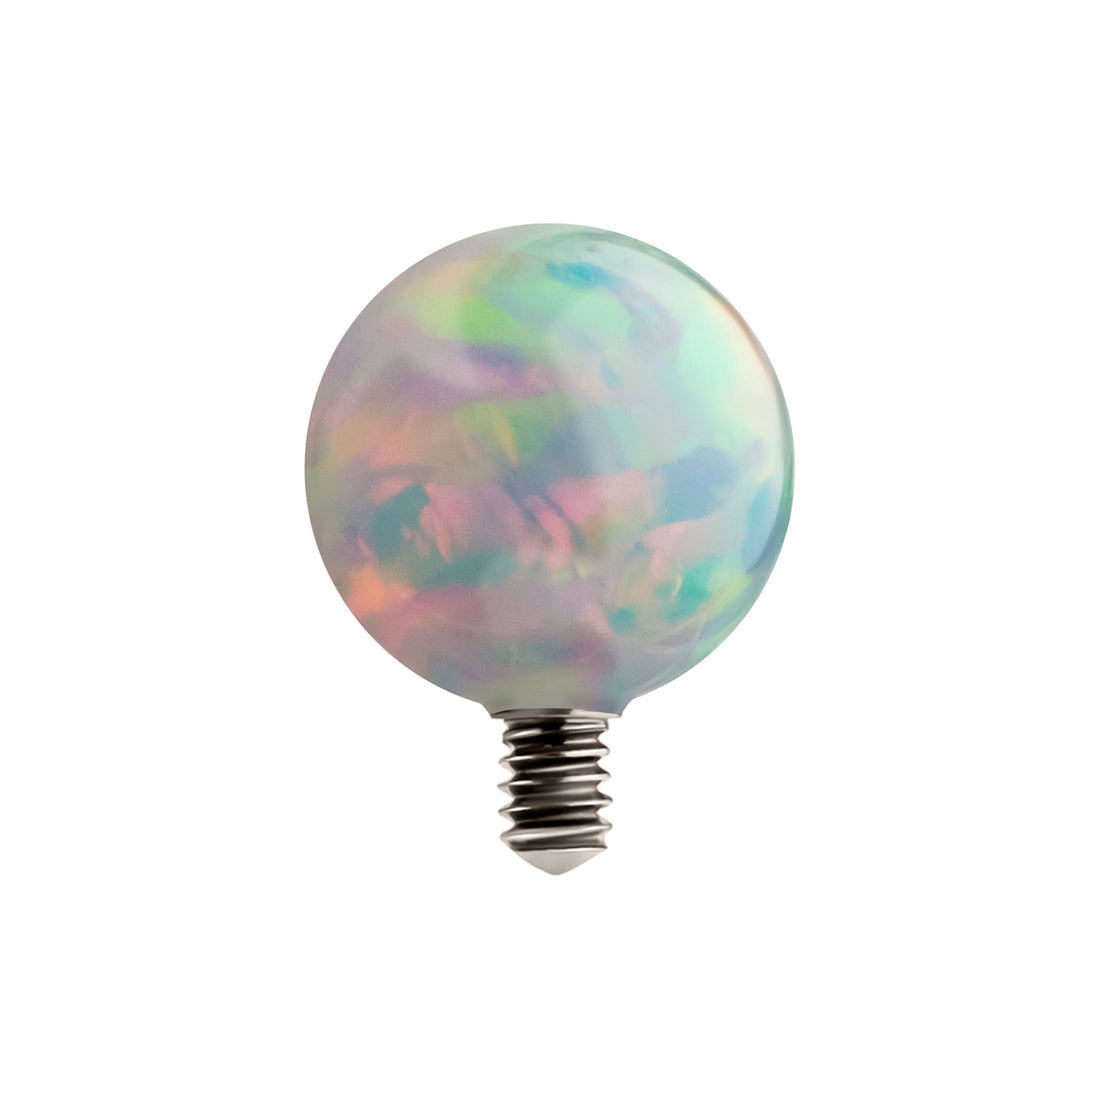 16g Titanium Internally Threaded with Synthetic Opal Ball Top